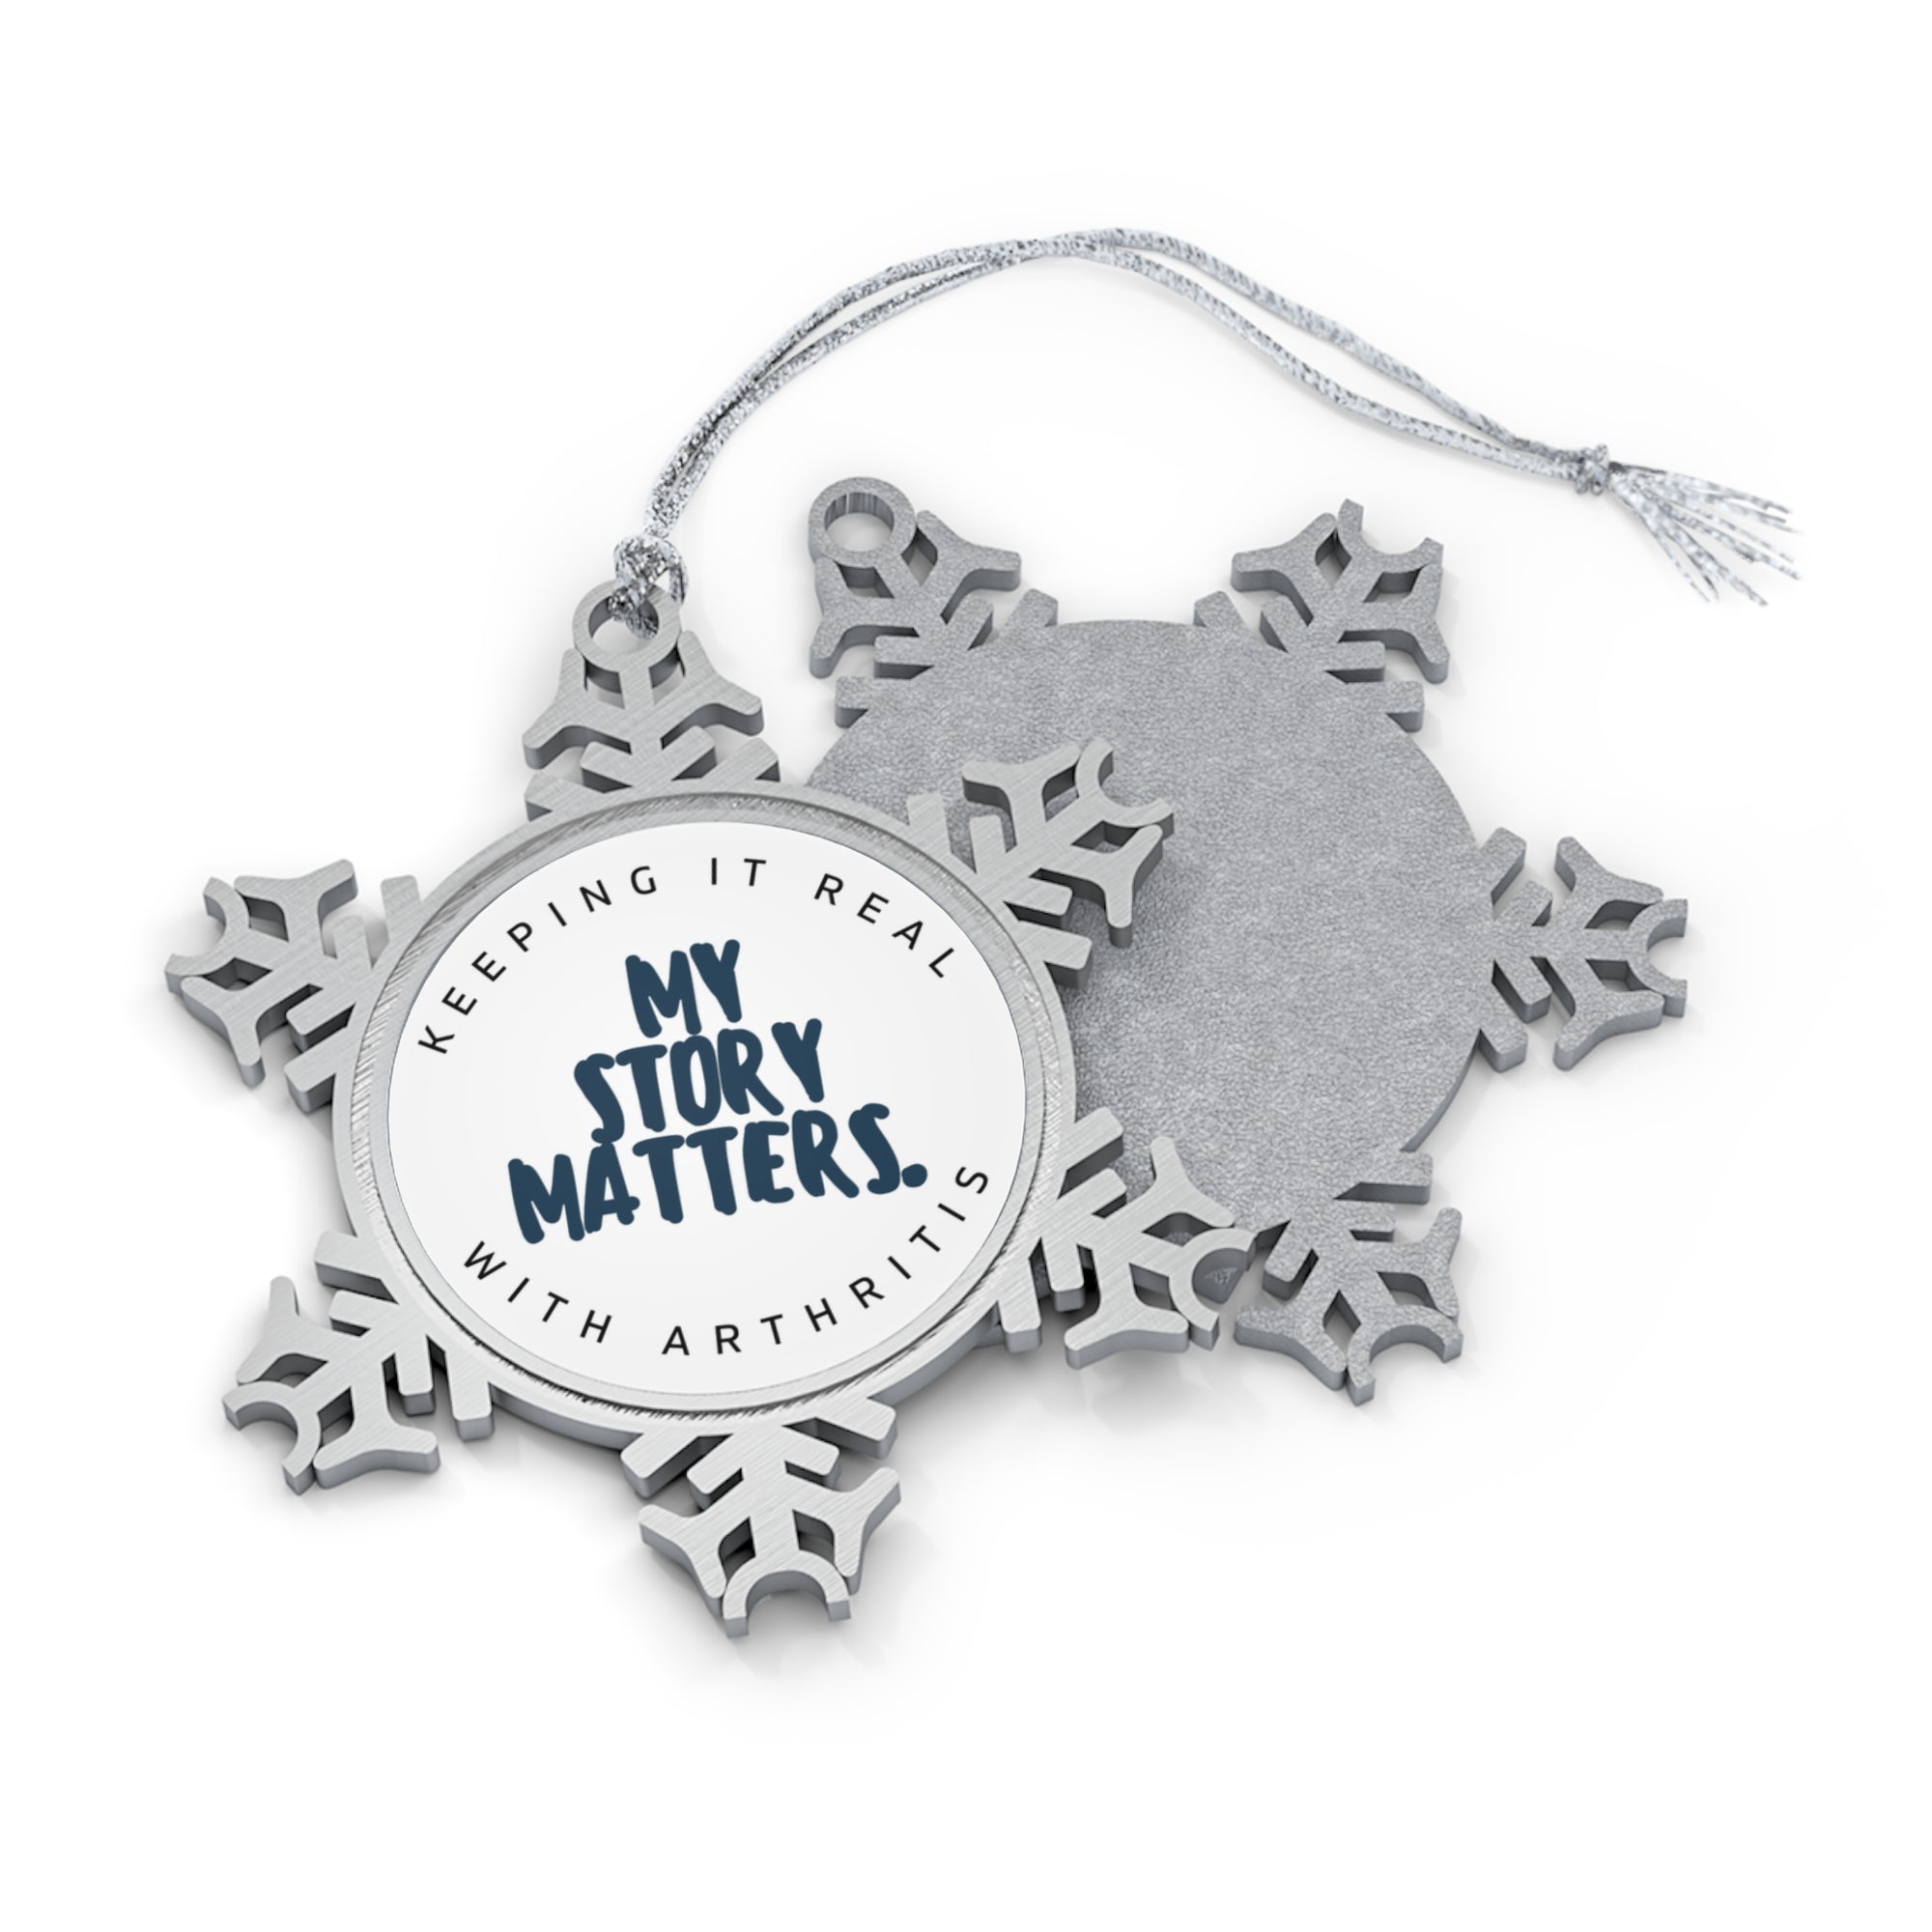 "My Story Matters." Arthritis - Snowflake Ornament